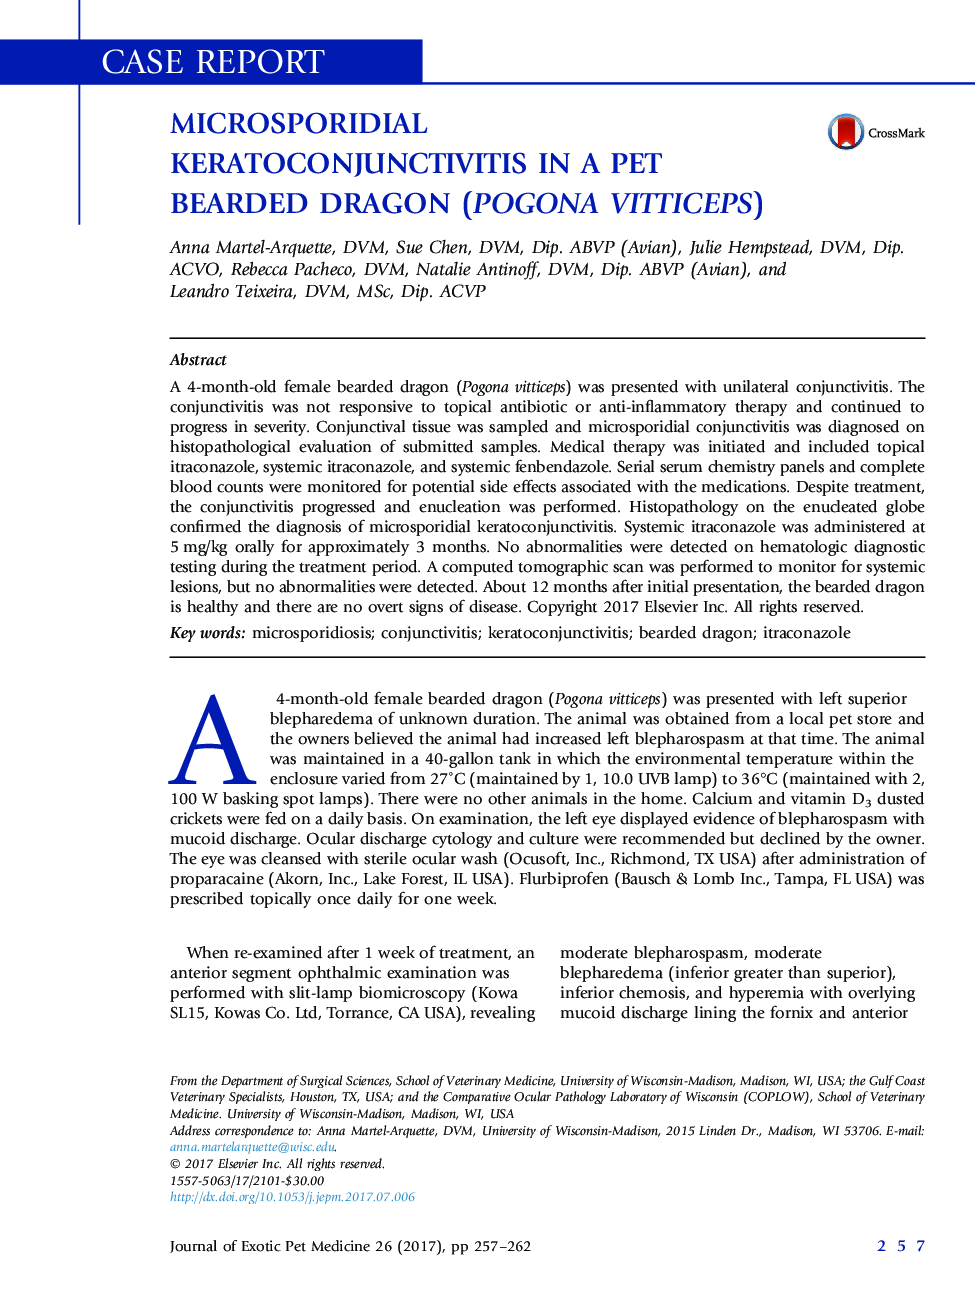 CASE REPORTMicrosporidial Keratoconjunctivitis in a Pet Bearded Dragon (Pogona vitticeps)